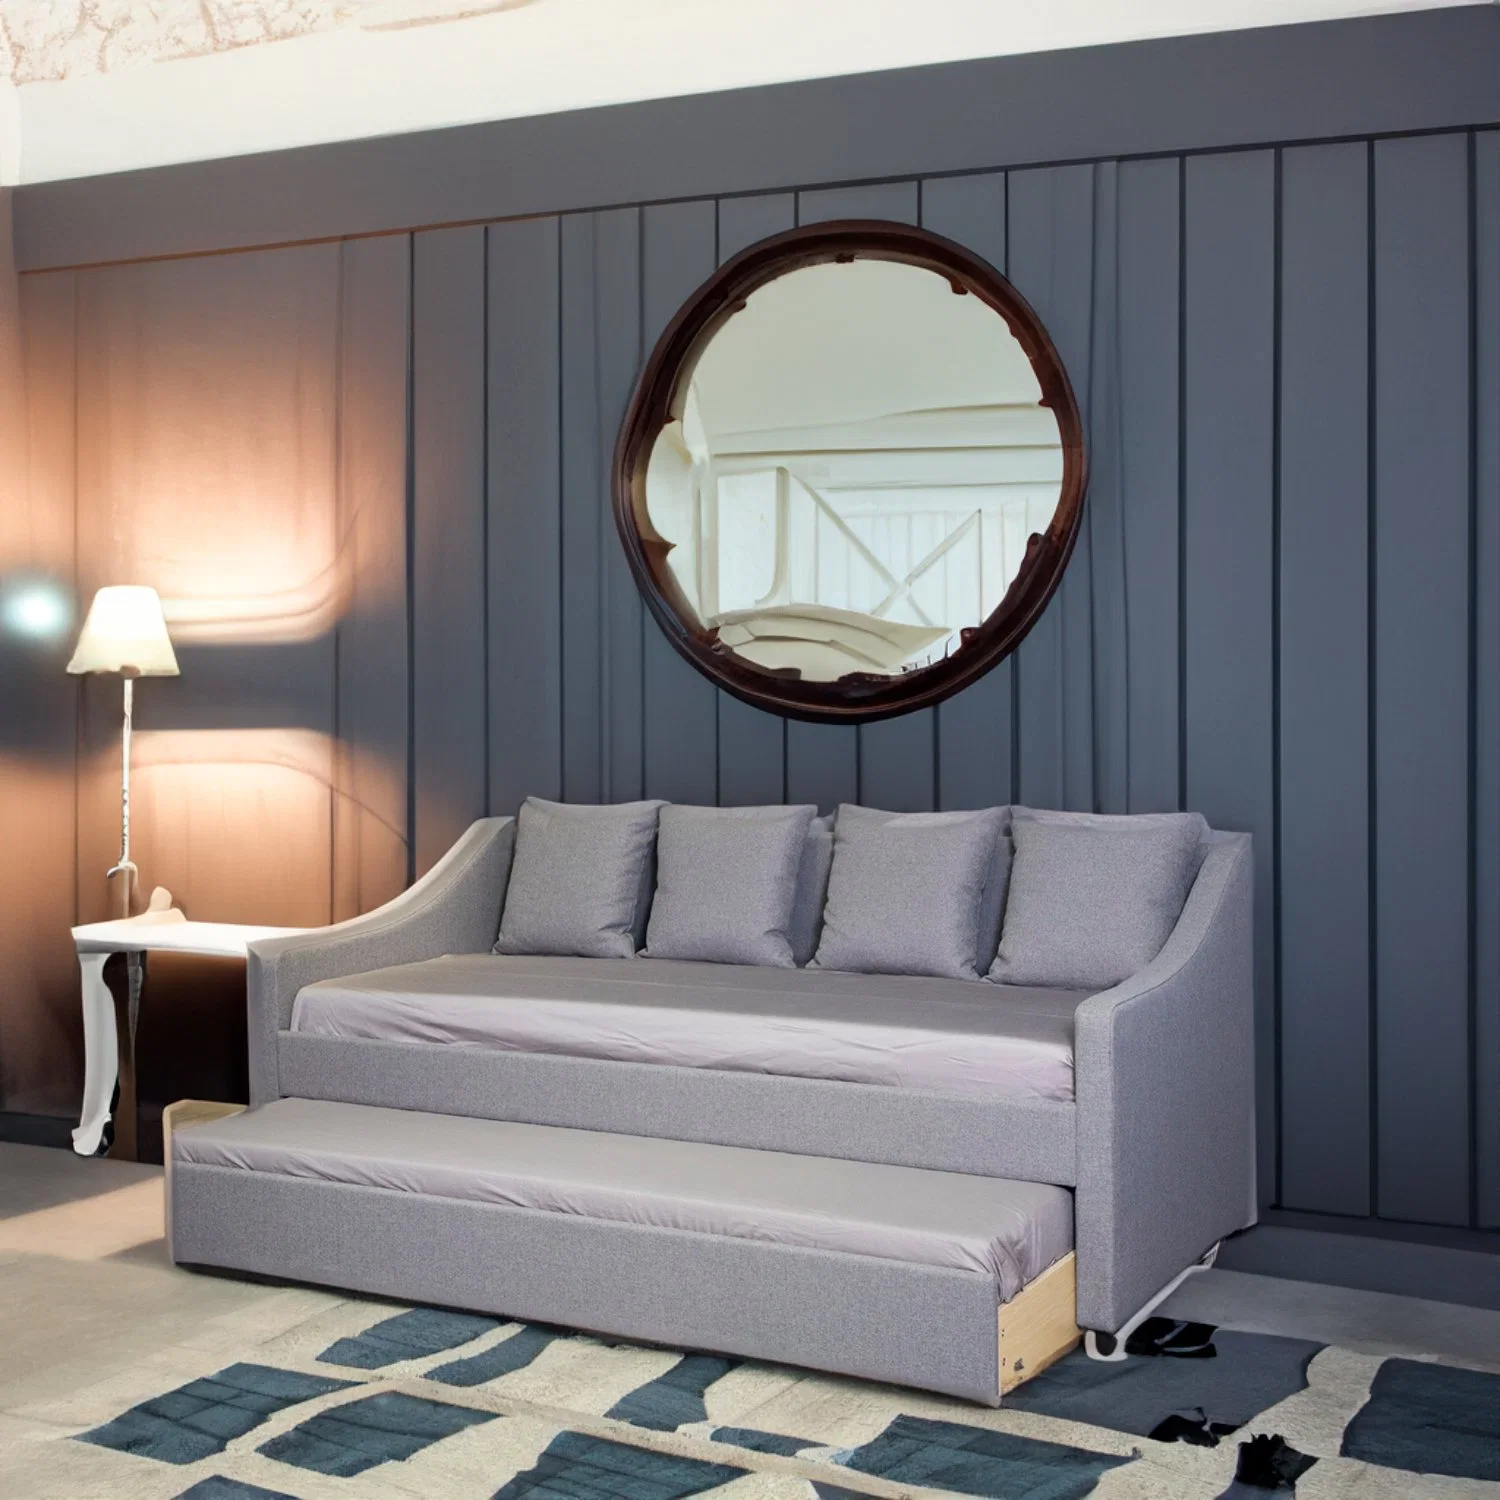 Fabricación Huayang Sofá plegable personalizado función Salón dormitorio Hogar Mobiliario cama